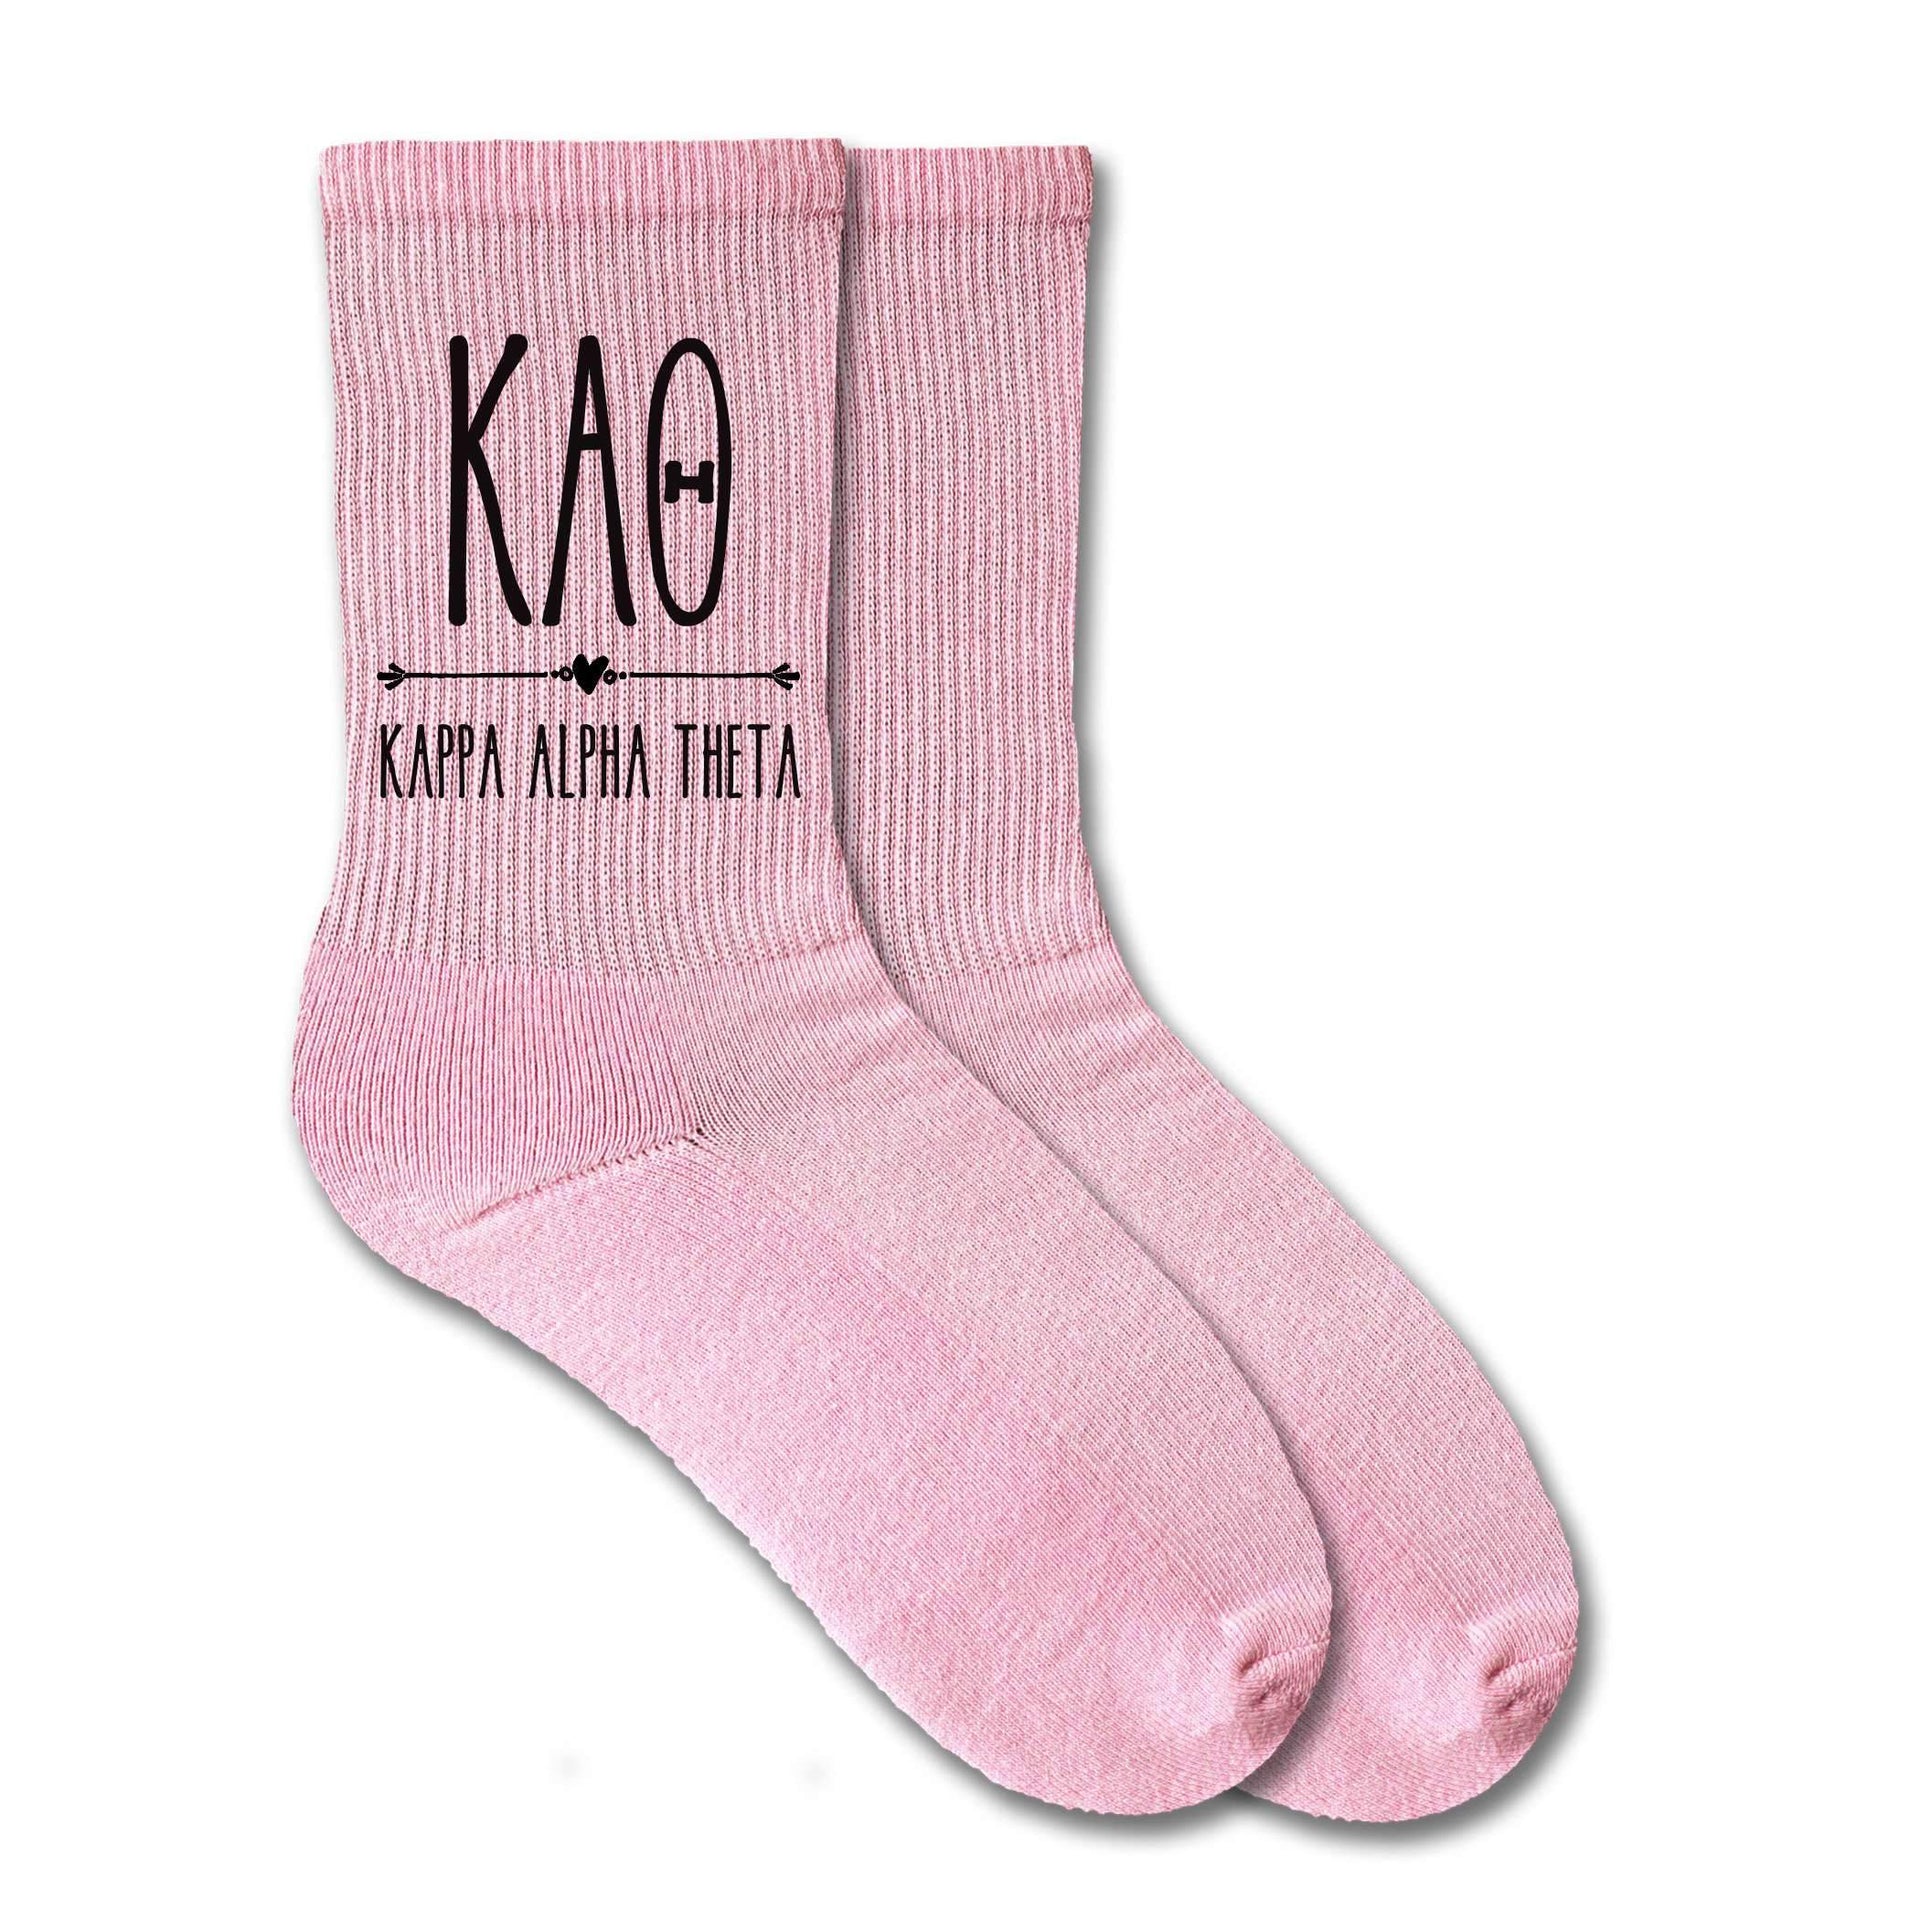 Kappa Alpha Theta sorority name and letters custom printed on pink cotton crew socks